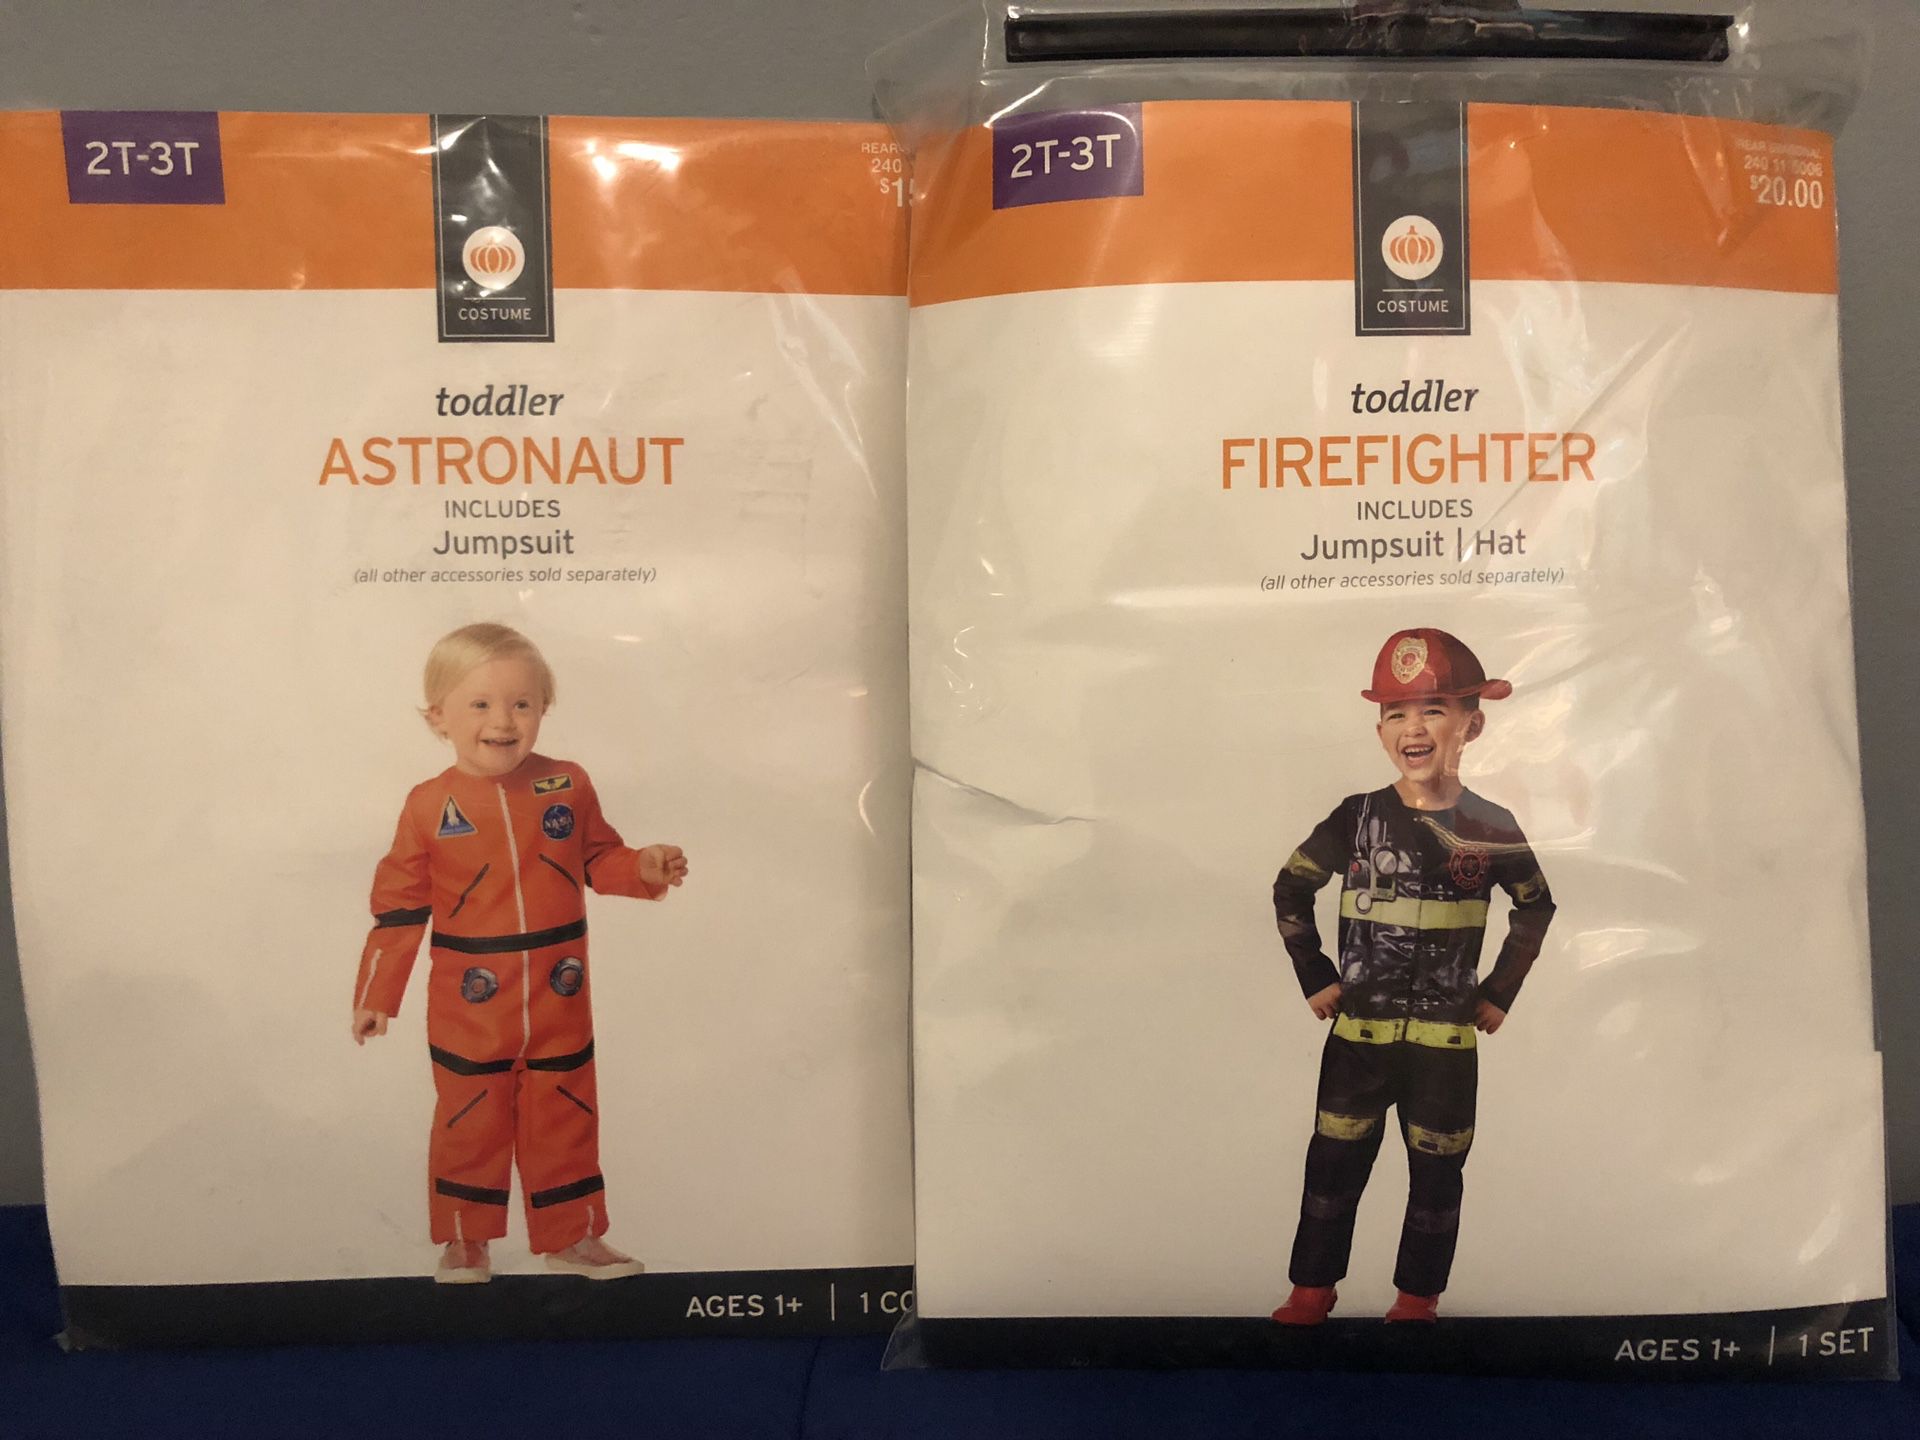 Astronaut and fireman costumes $8 ea.